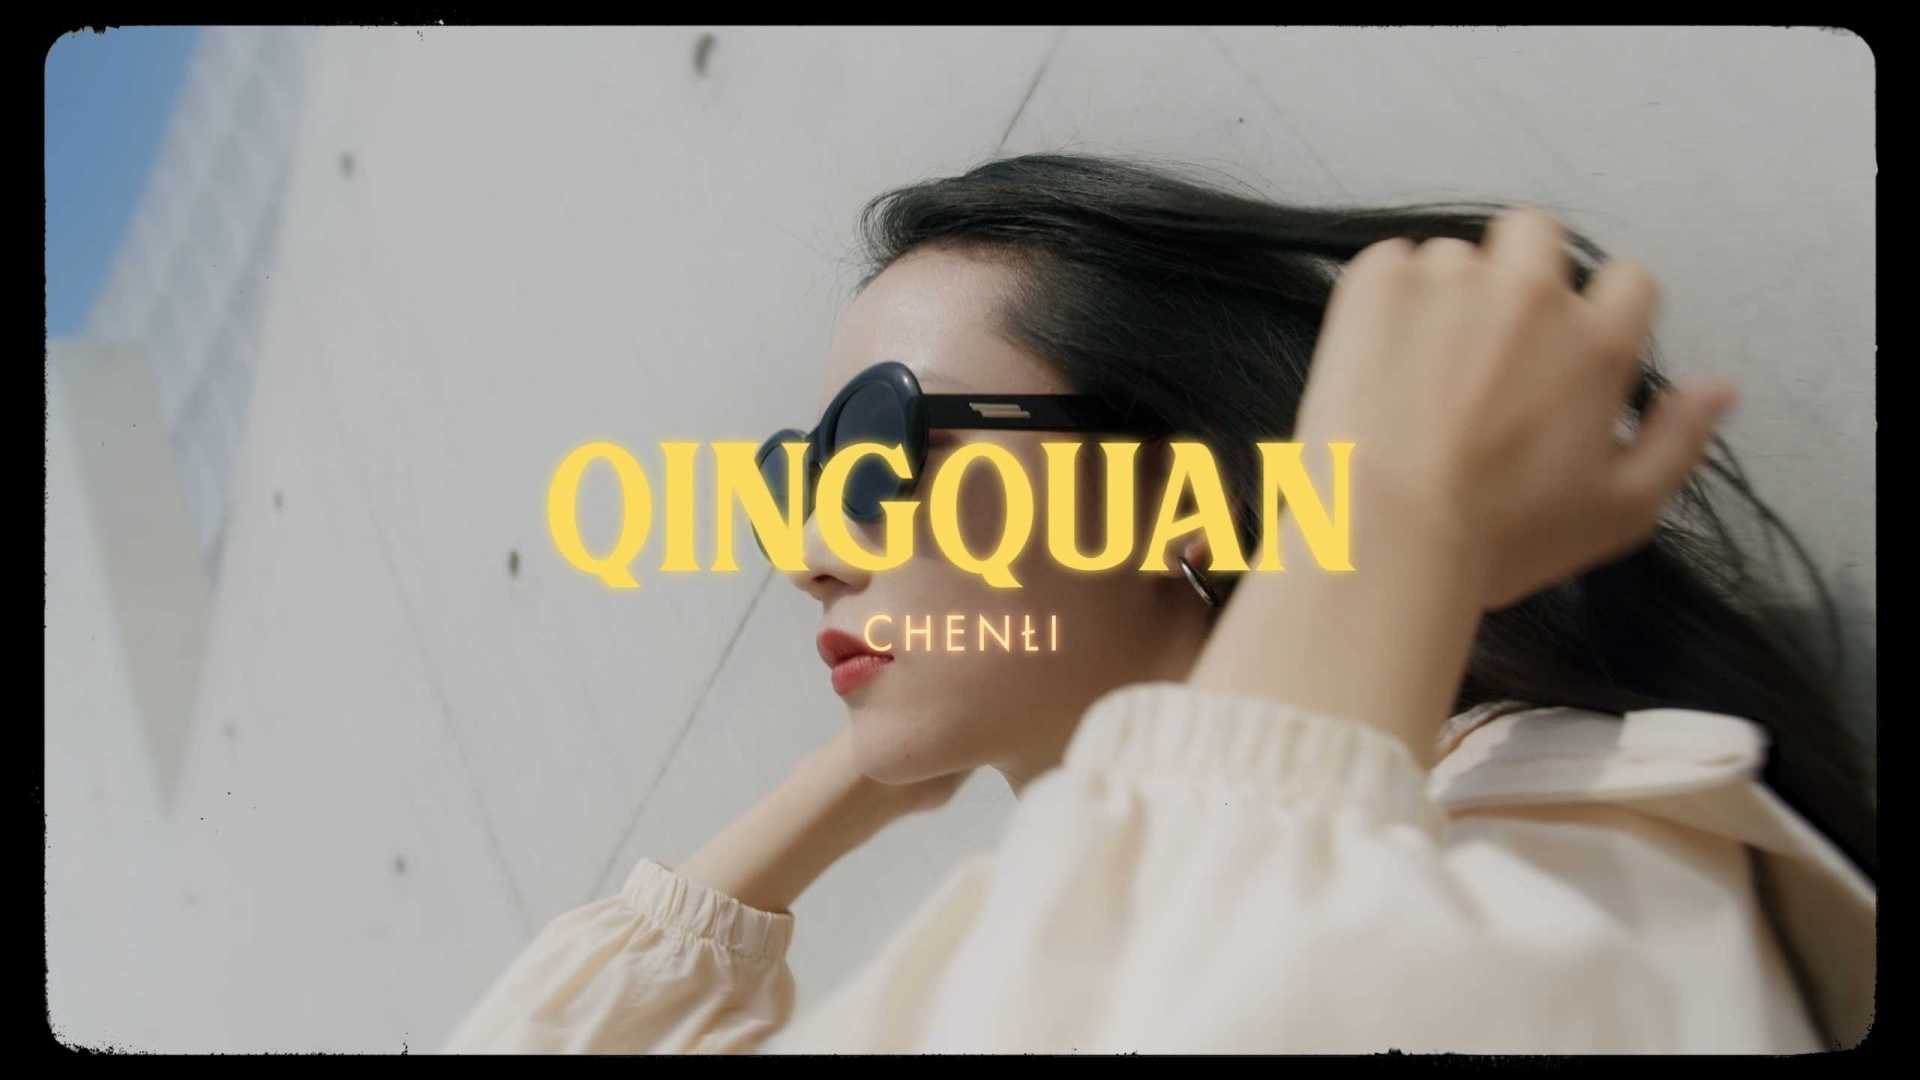 A Cinematic Portrait Film - QINGQUAN -